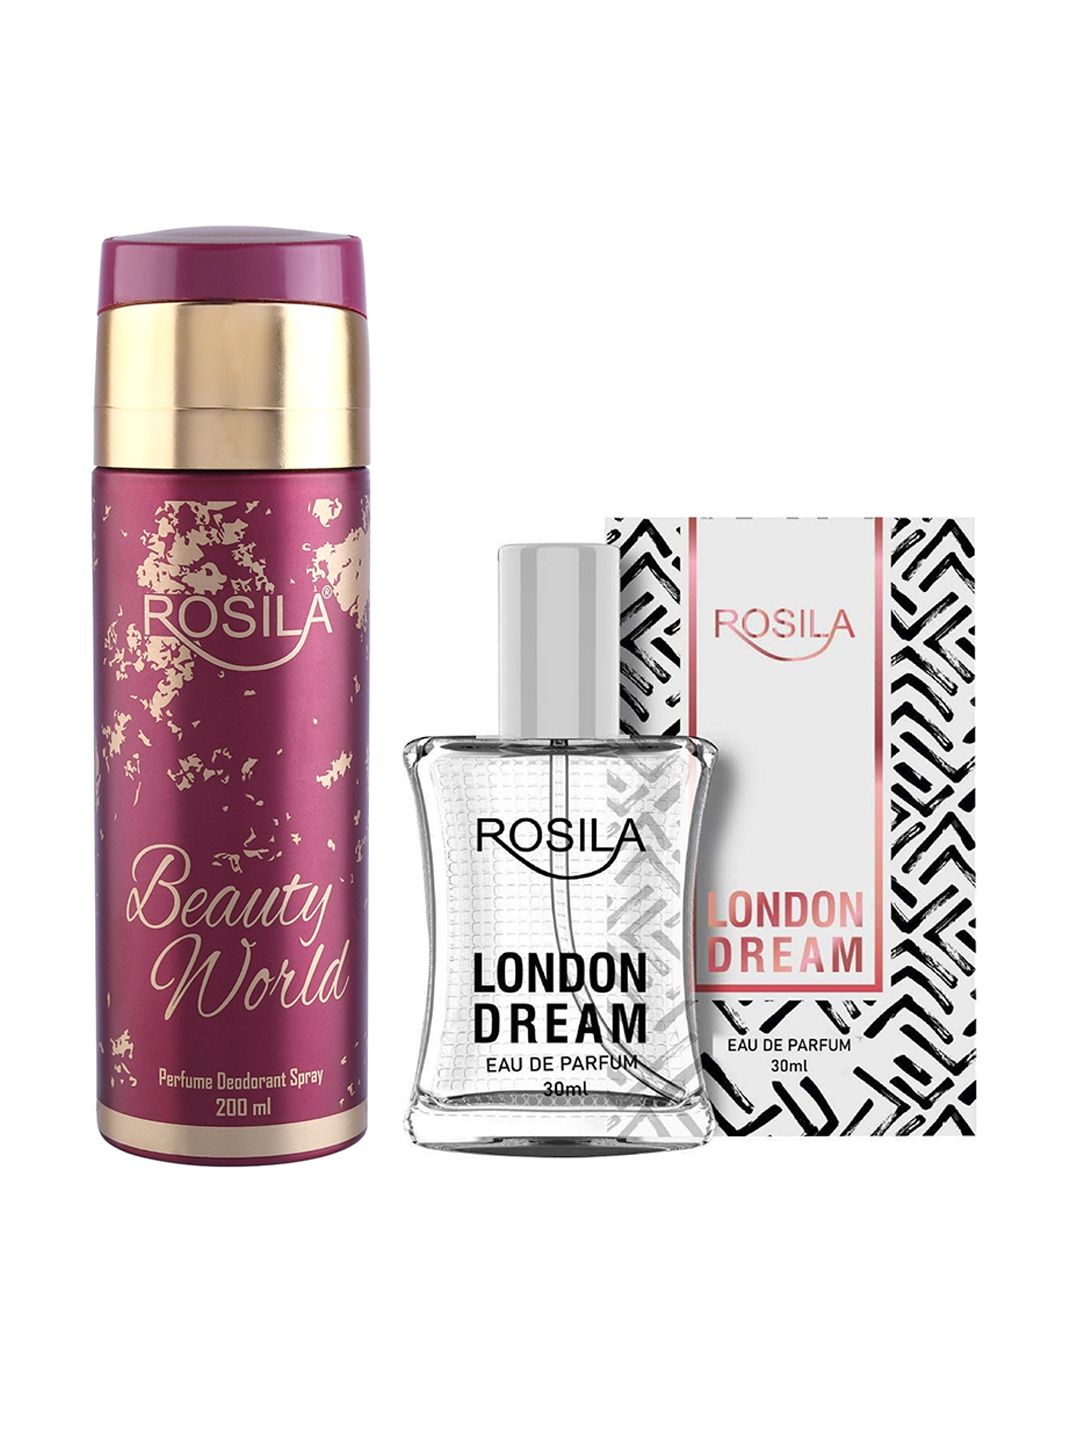 ROSILA Set of London Dream Eau De Parfum 30 ml & Beauty World Deodorant 200 ml Price in India